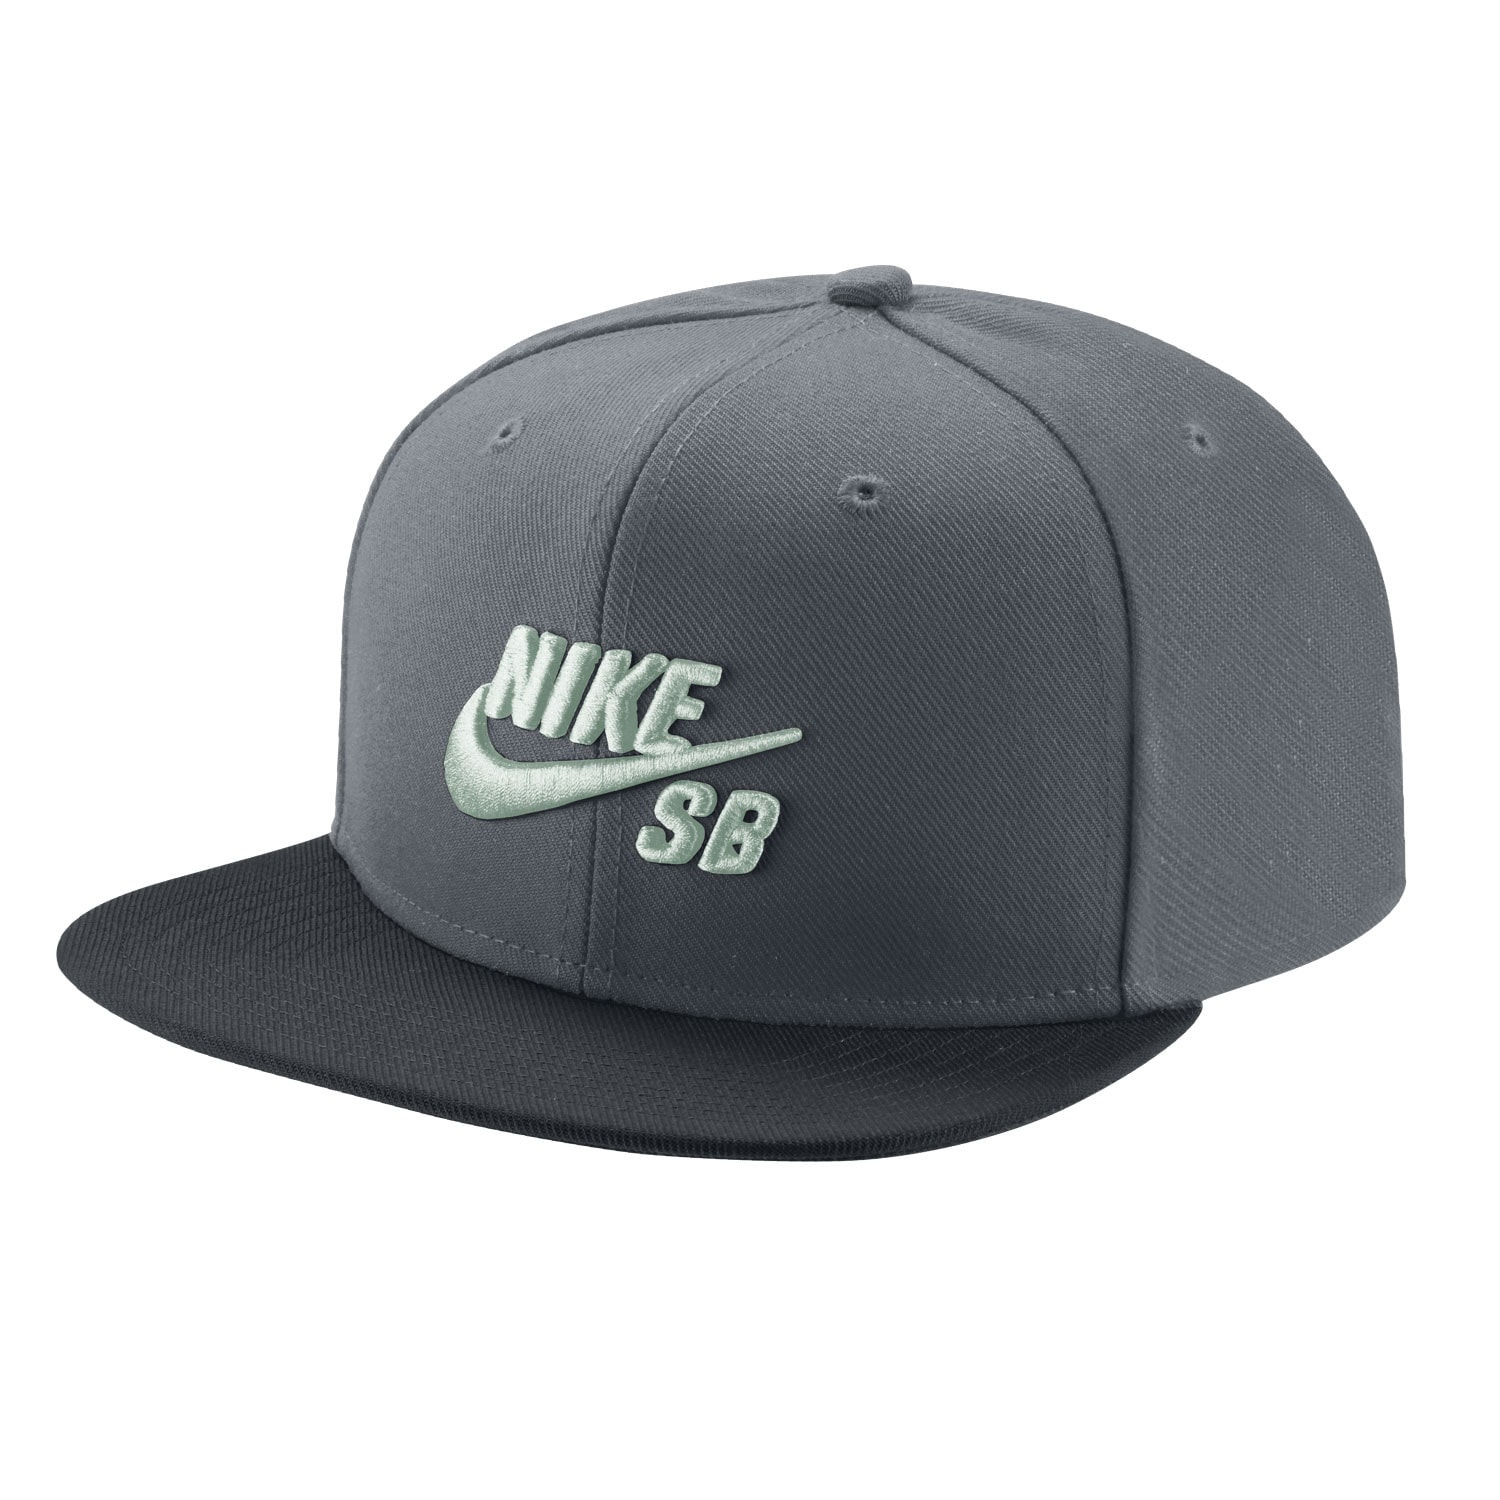 Cap Nike SB Pro cool grey/black/pine green | Zezula